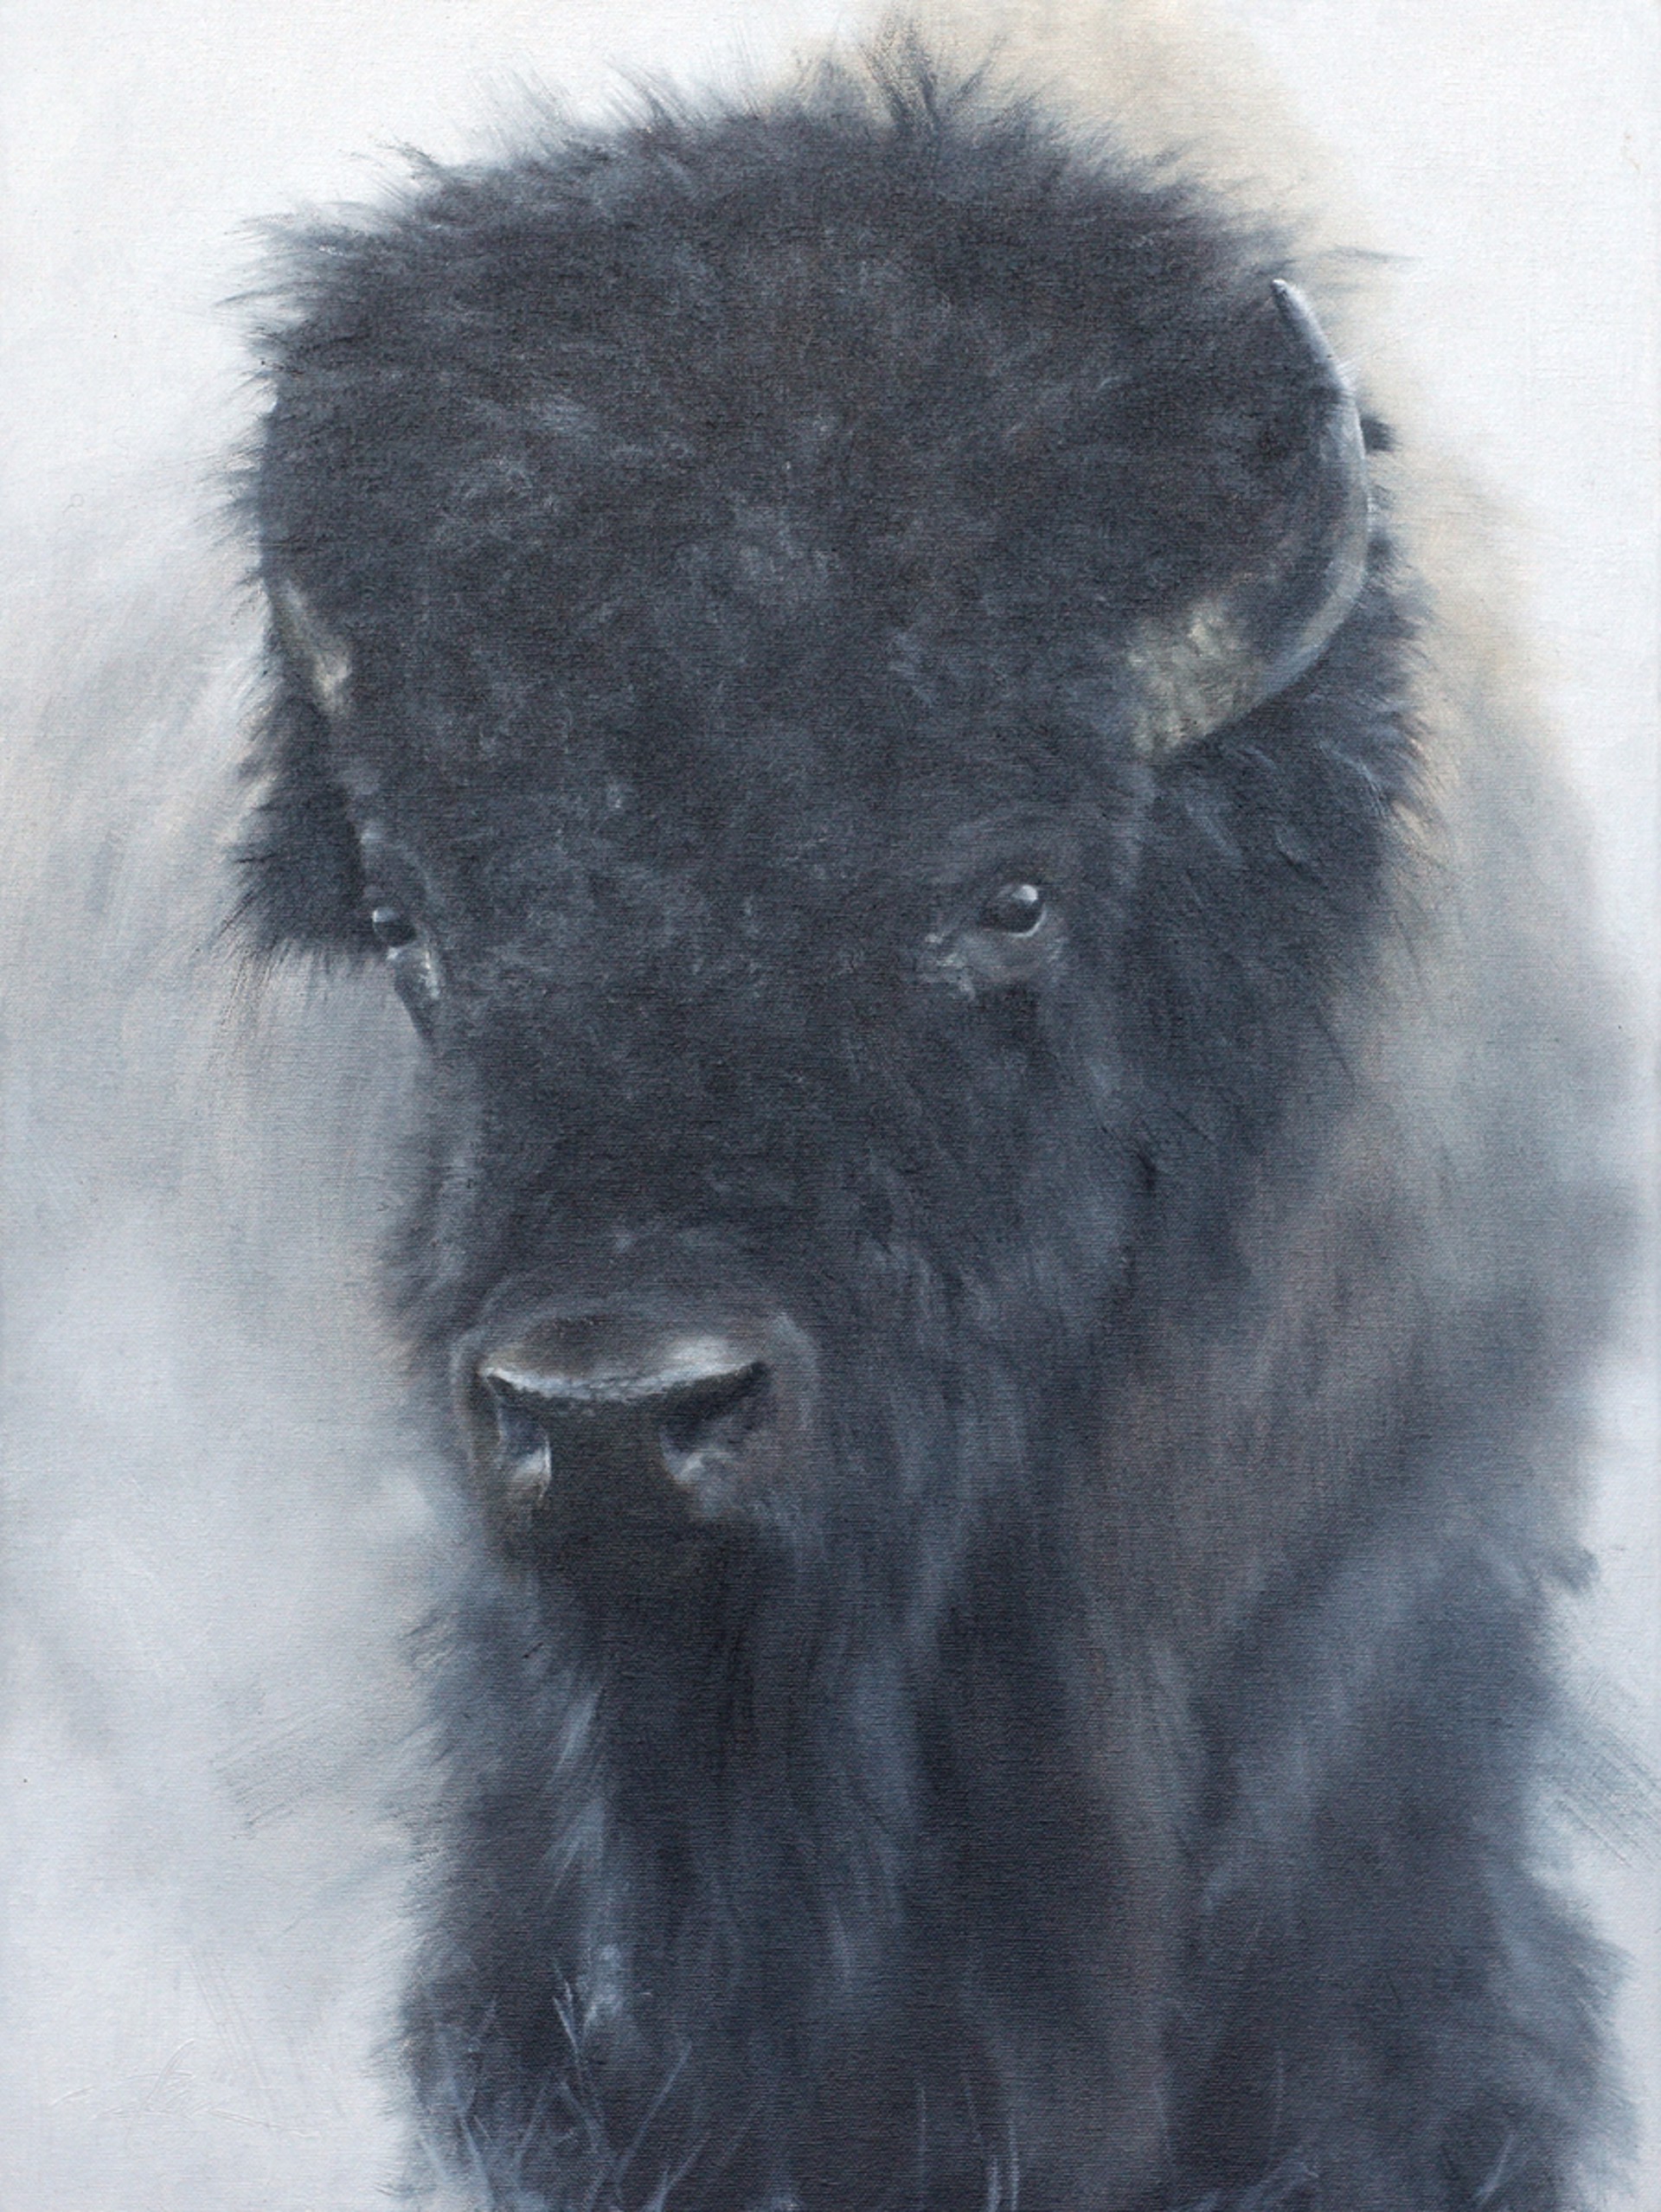 Portrait Of A Bison In A Winter Landscape